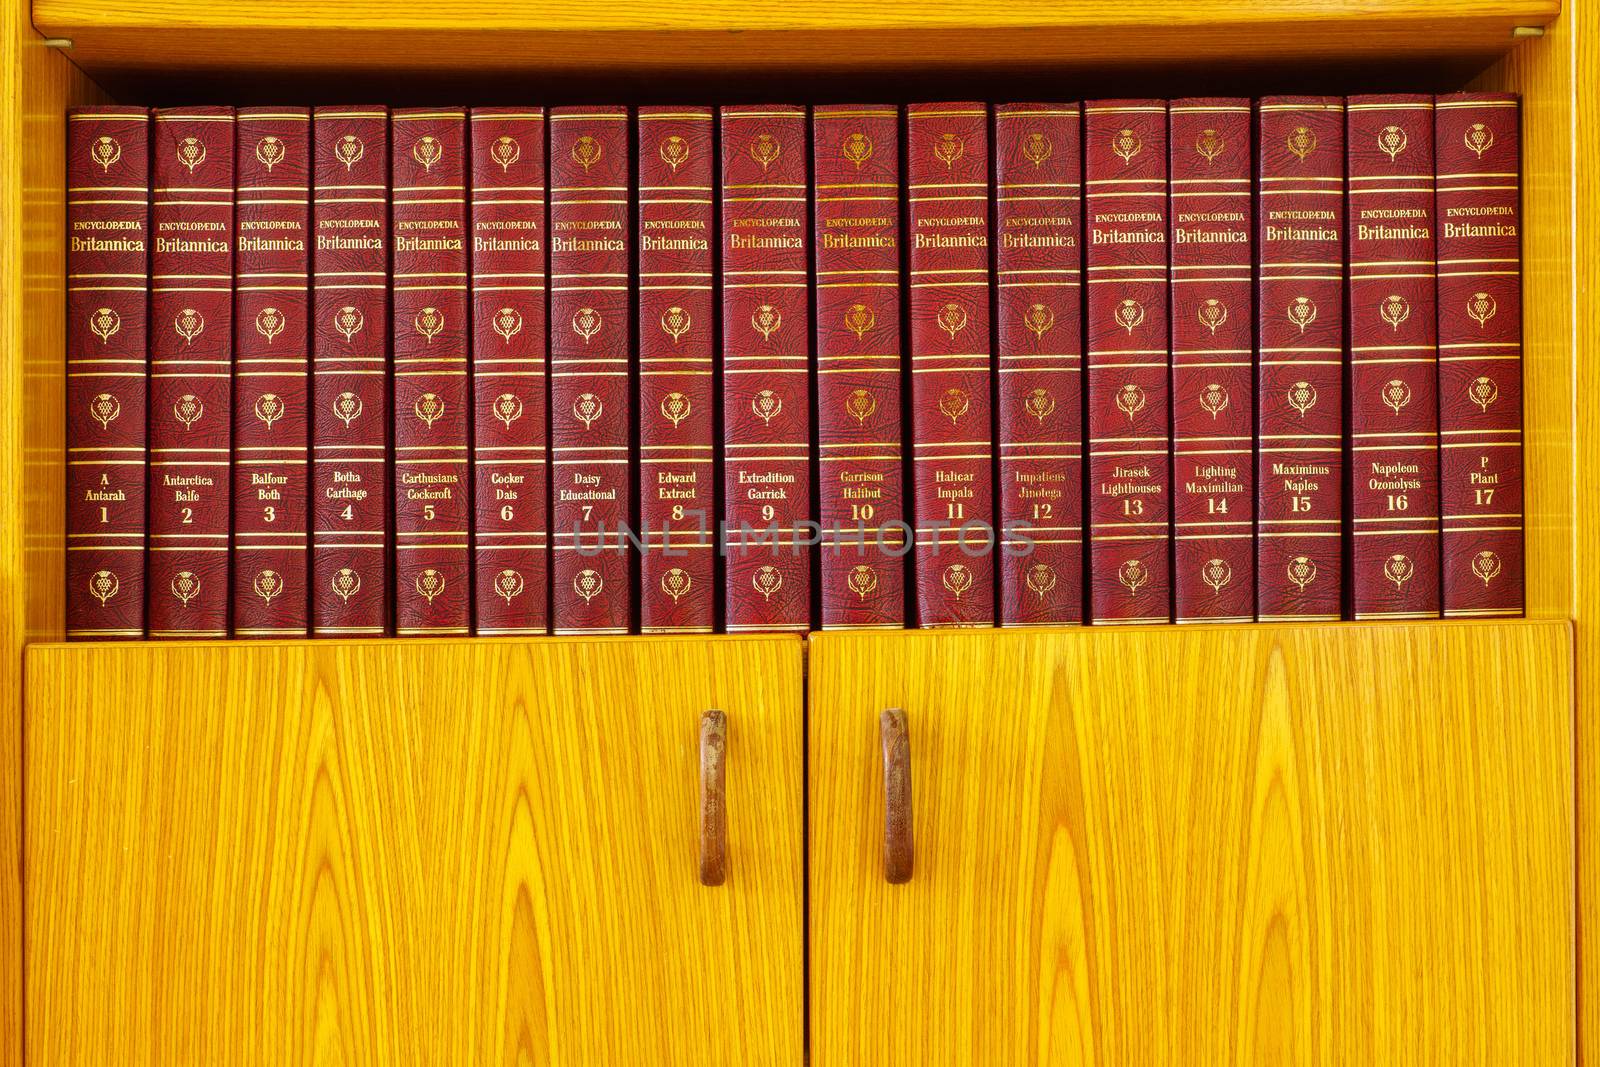 Haifa, Israel = August 14, 2019: Volumes 1 - 17 of the Encyclopedia Britannica, 1965 edition, on a wooden bookshelf